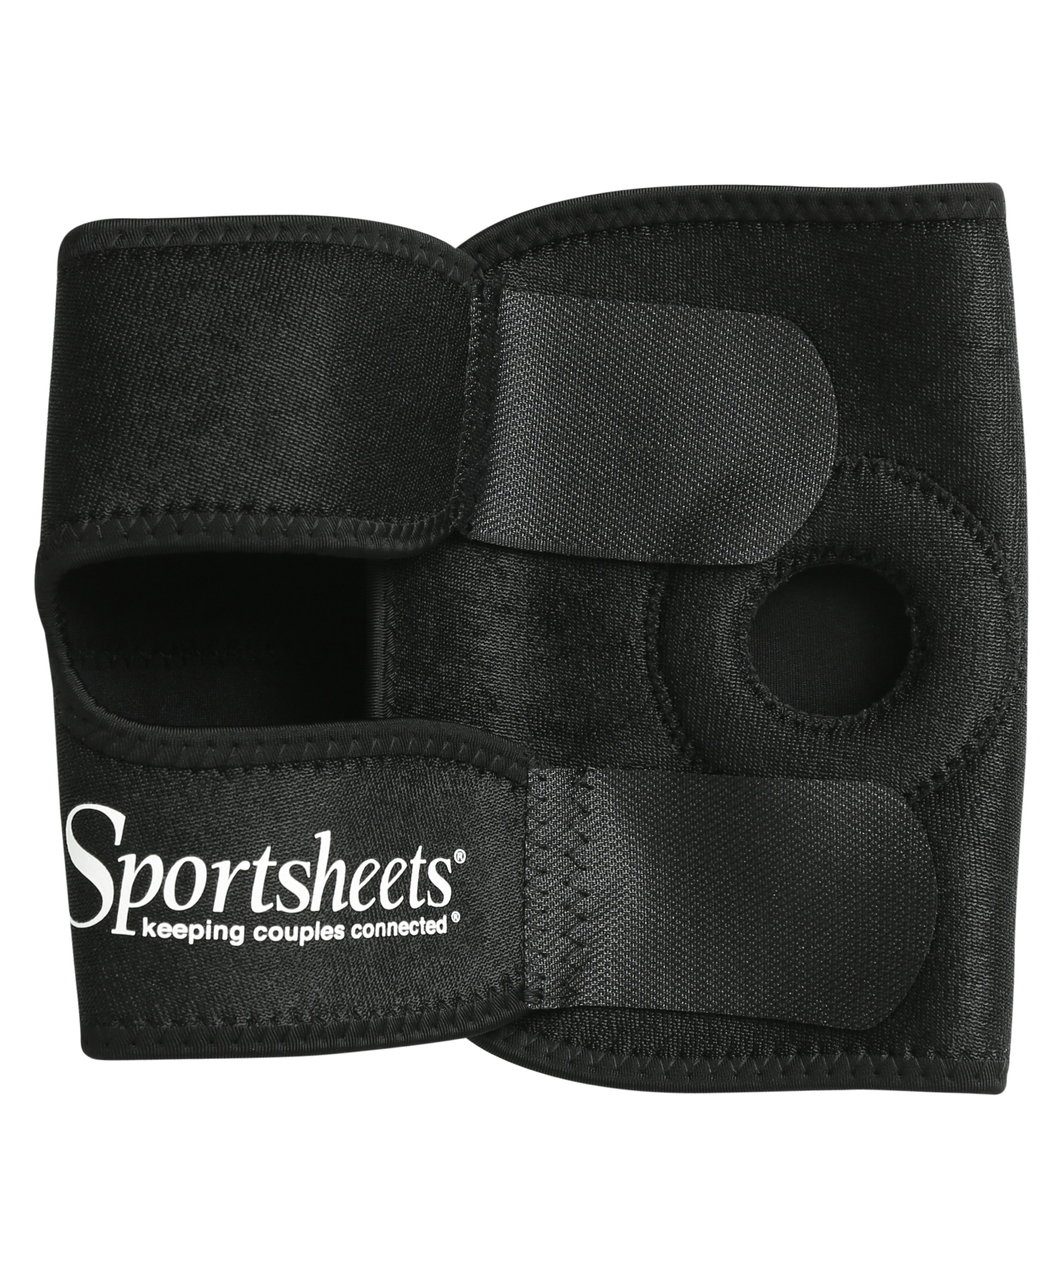 Sportsheets Thigh Strap-on